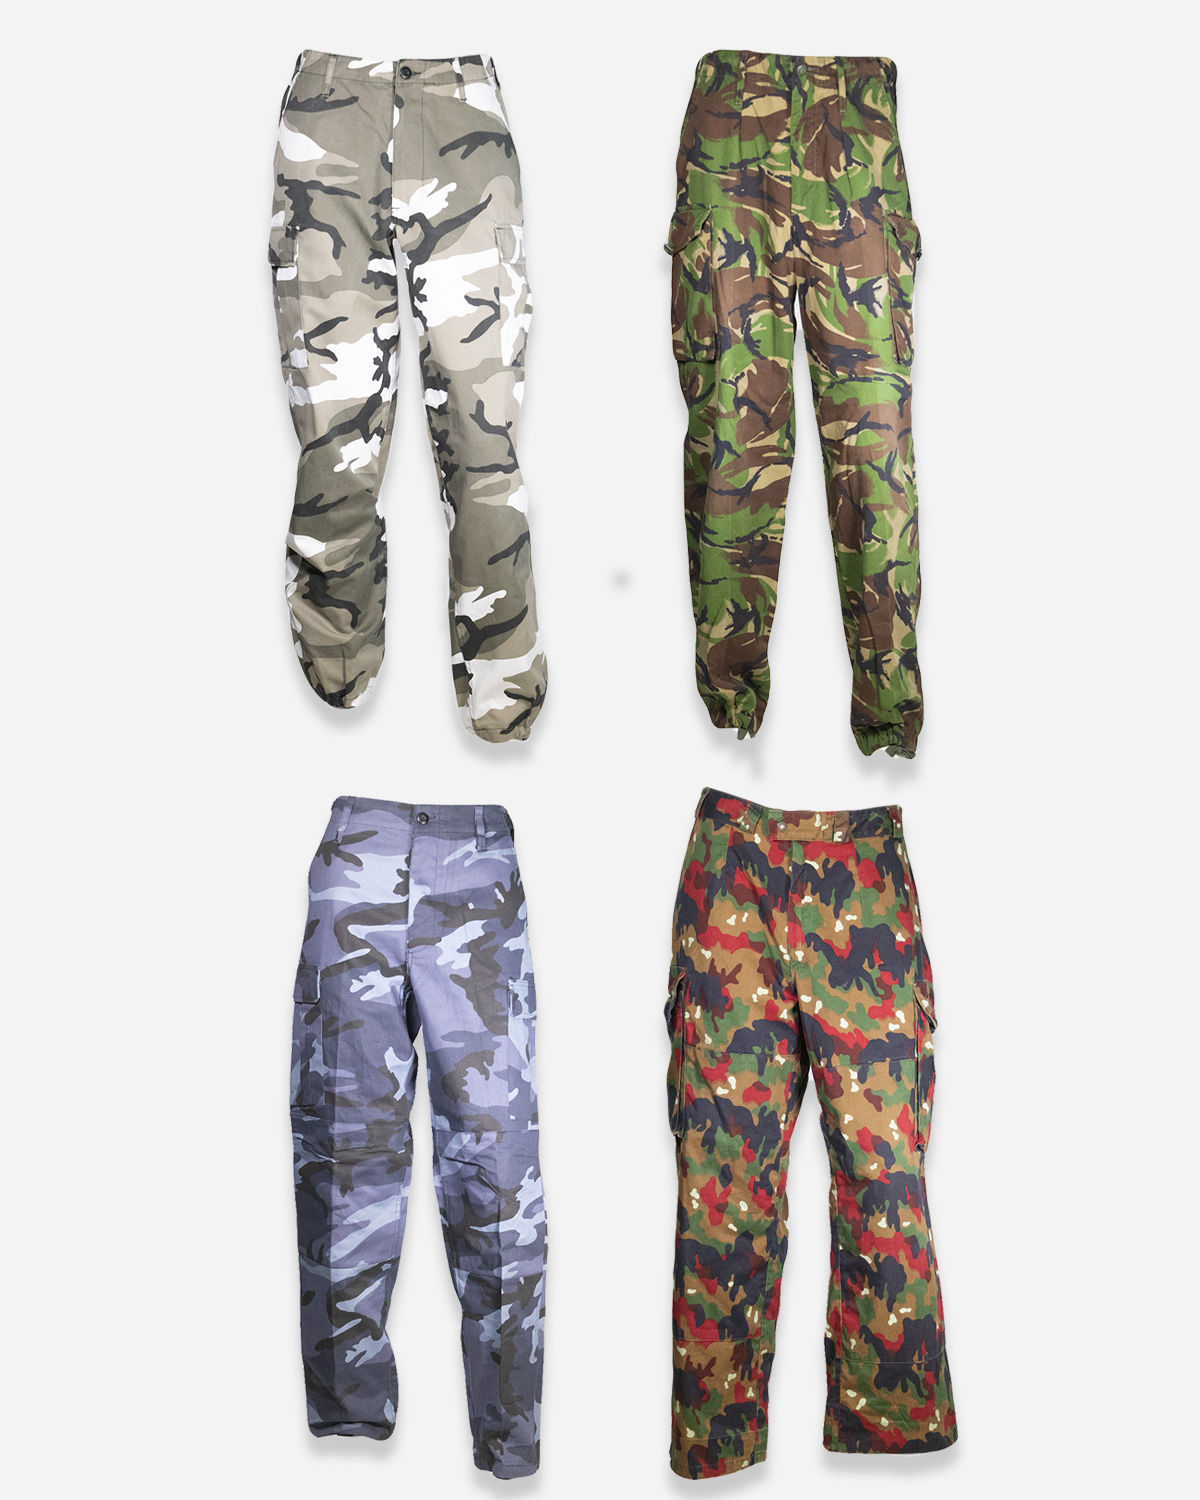 Box quattro pantaloni militari camouflage 